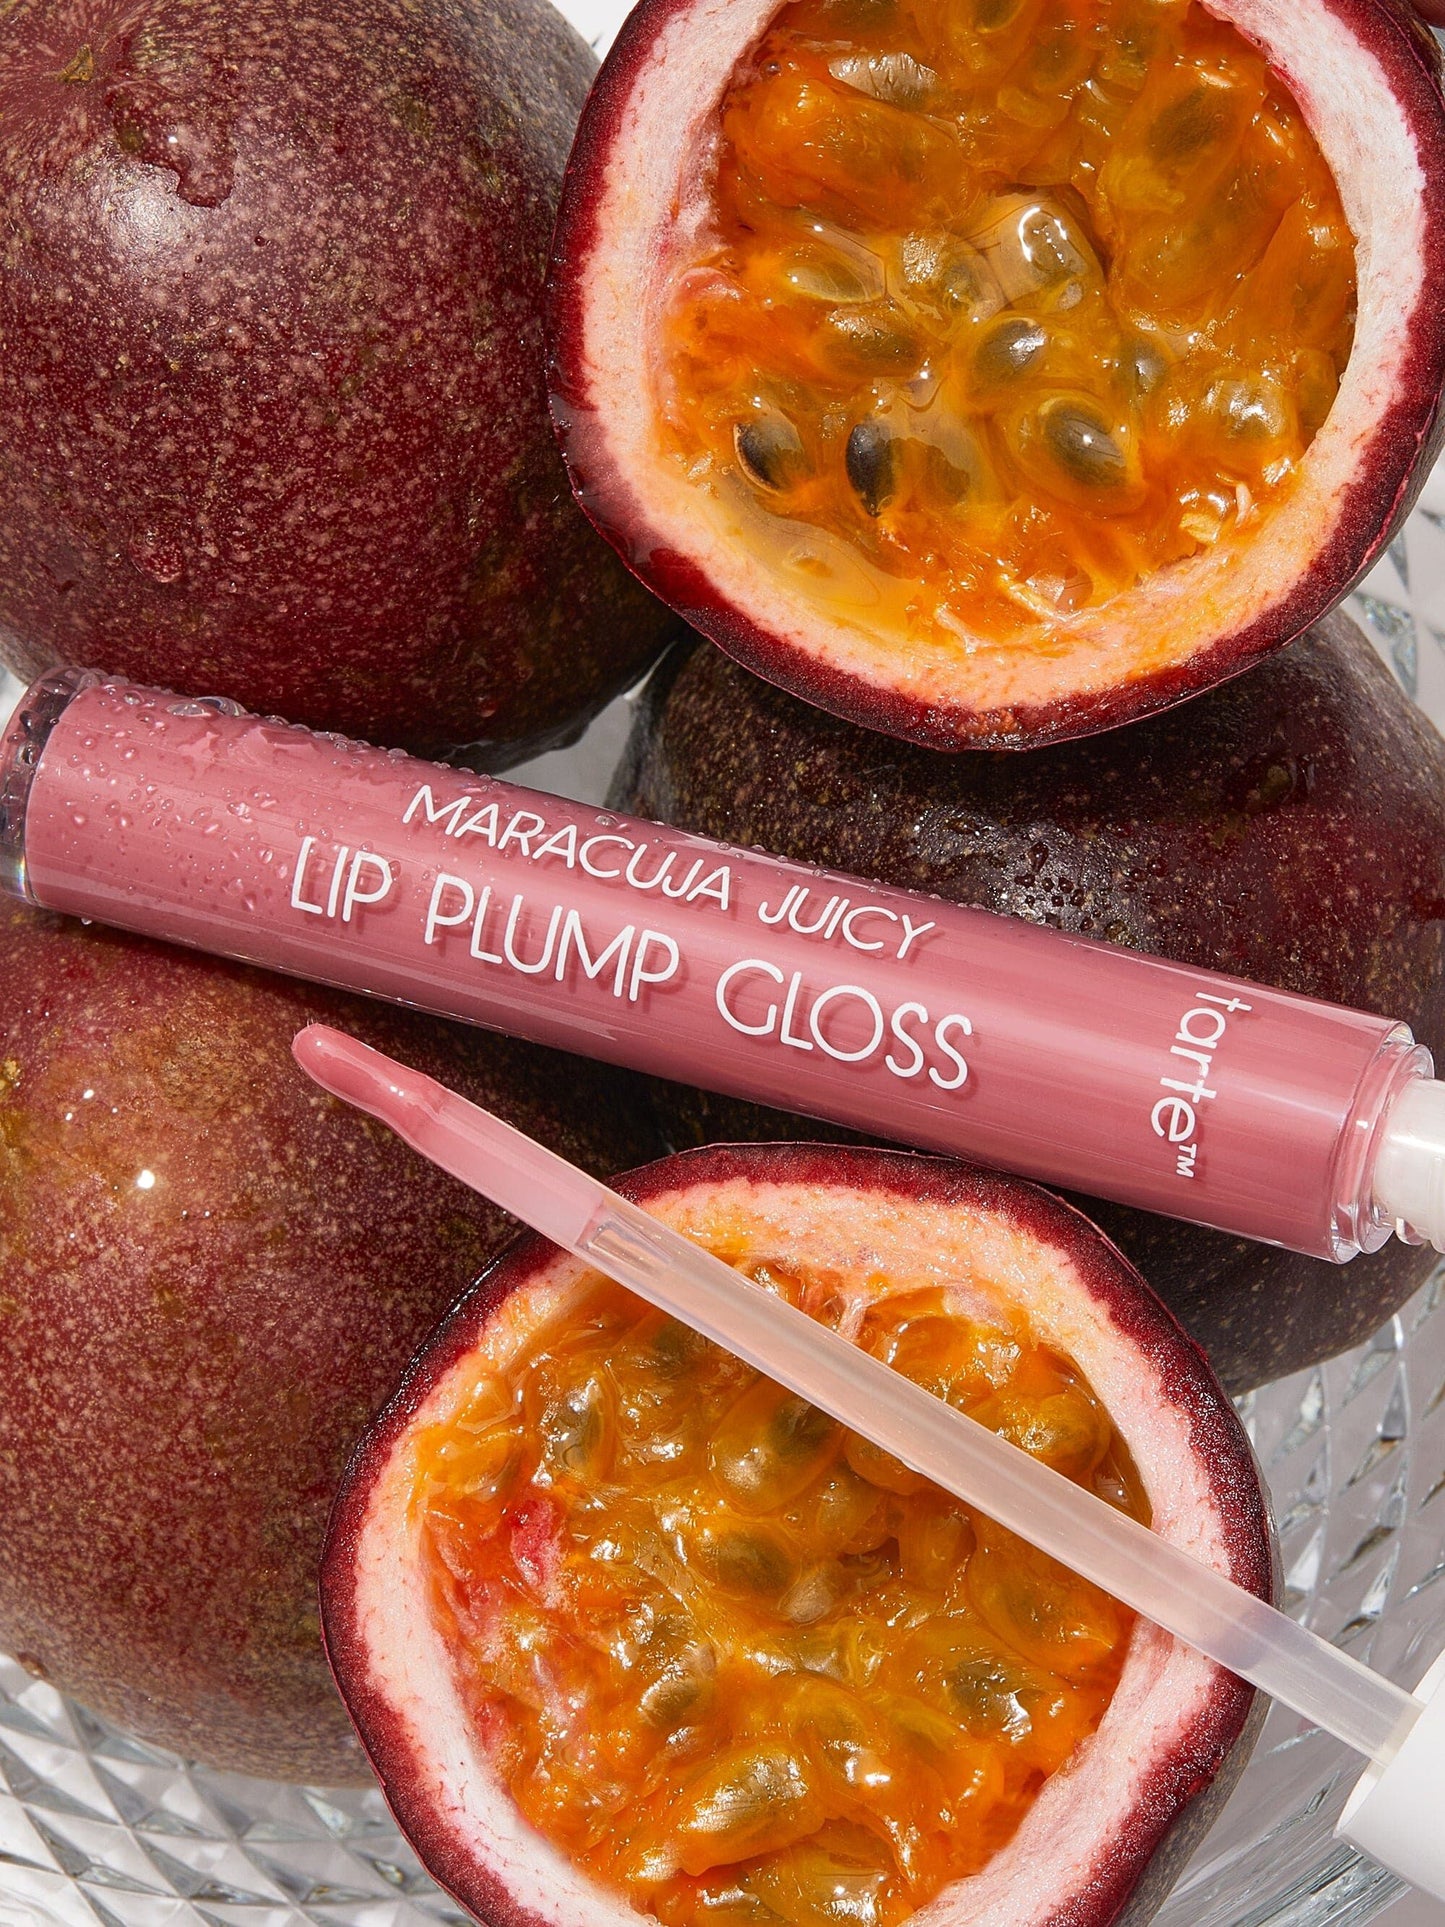 Tarte Maracuja Juicy Lip Plump Gloss | Sweet Pea